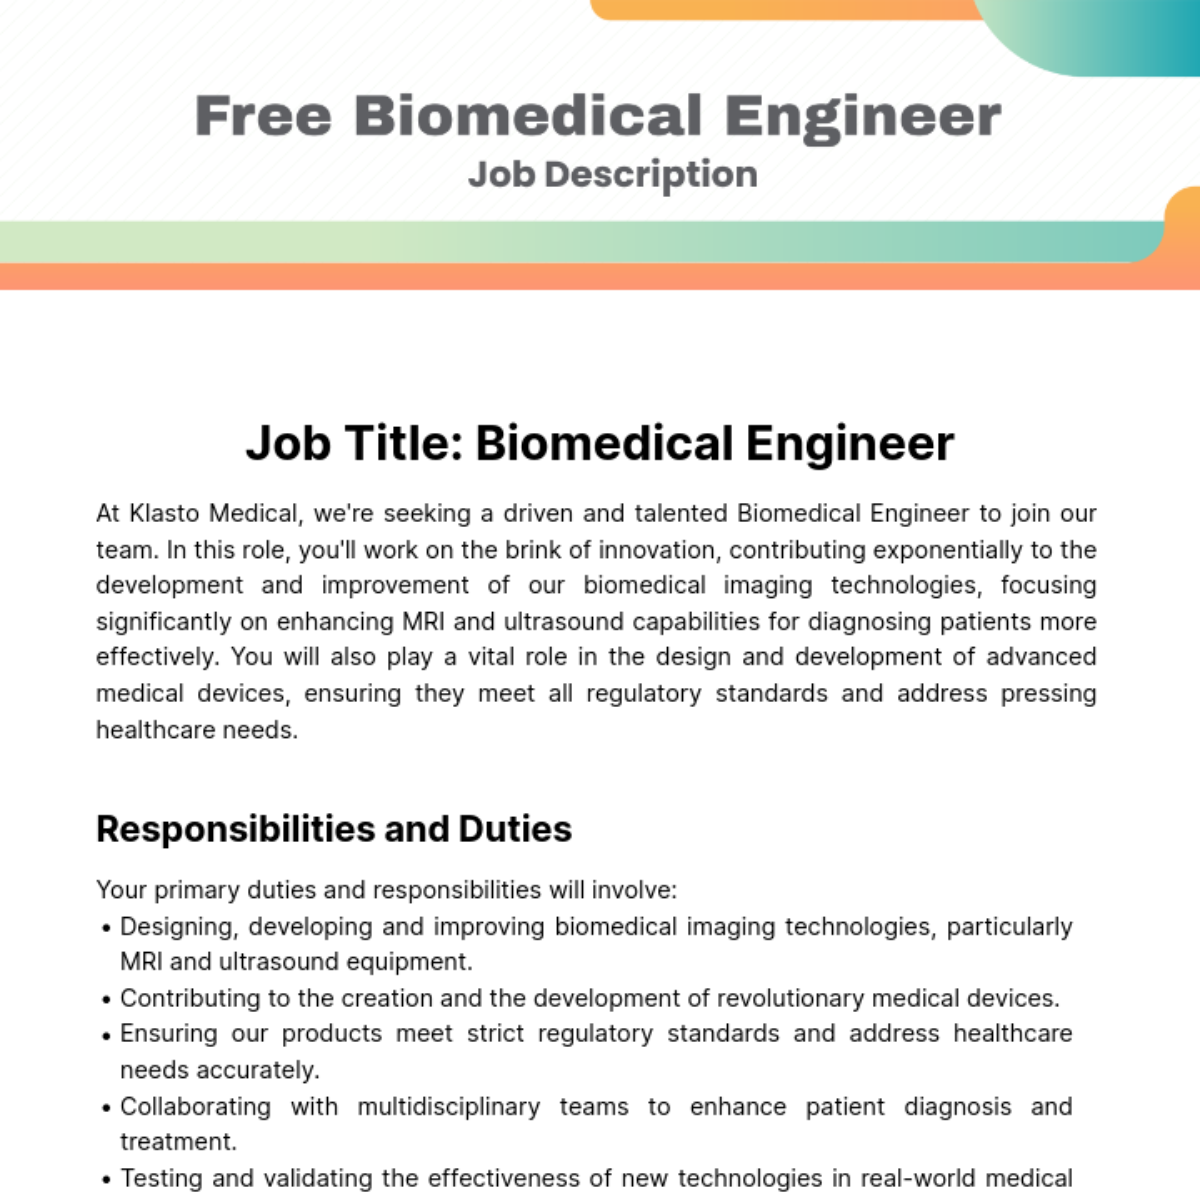 Free Biomedical Engineer Job Description Template